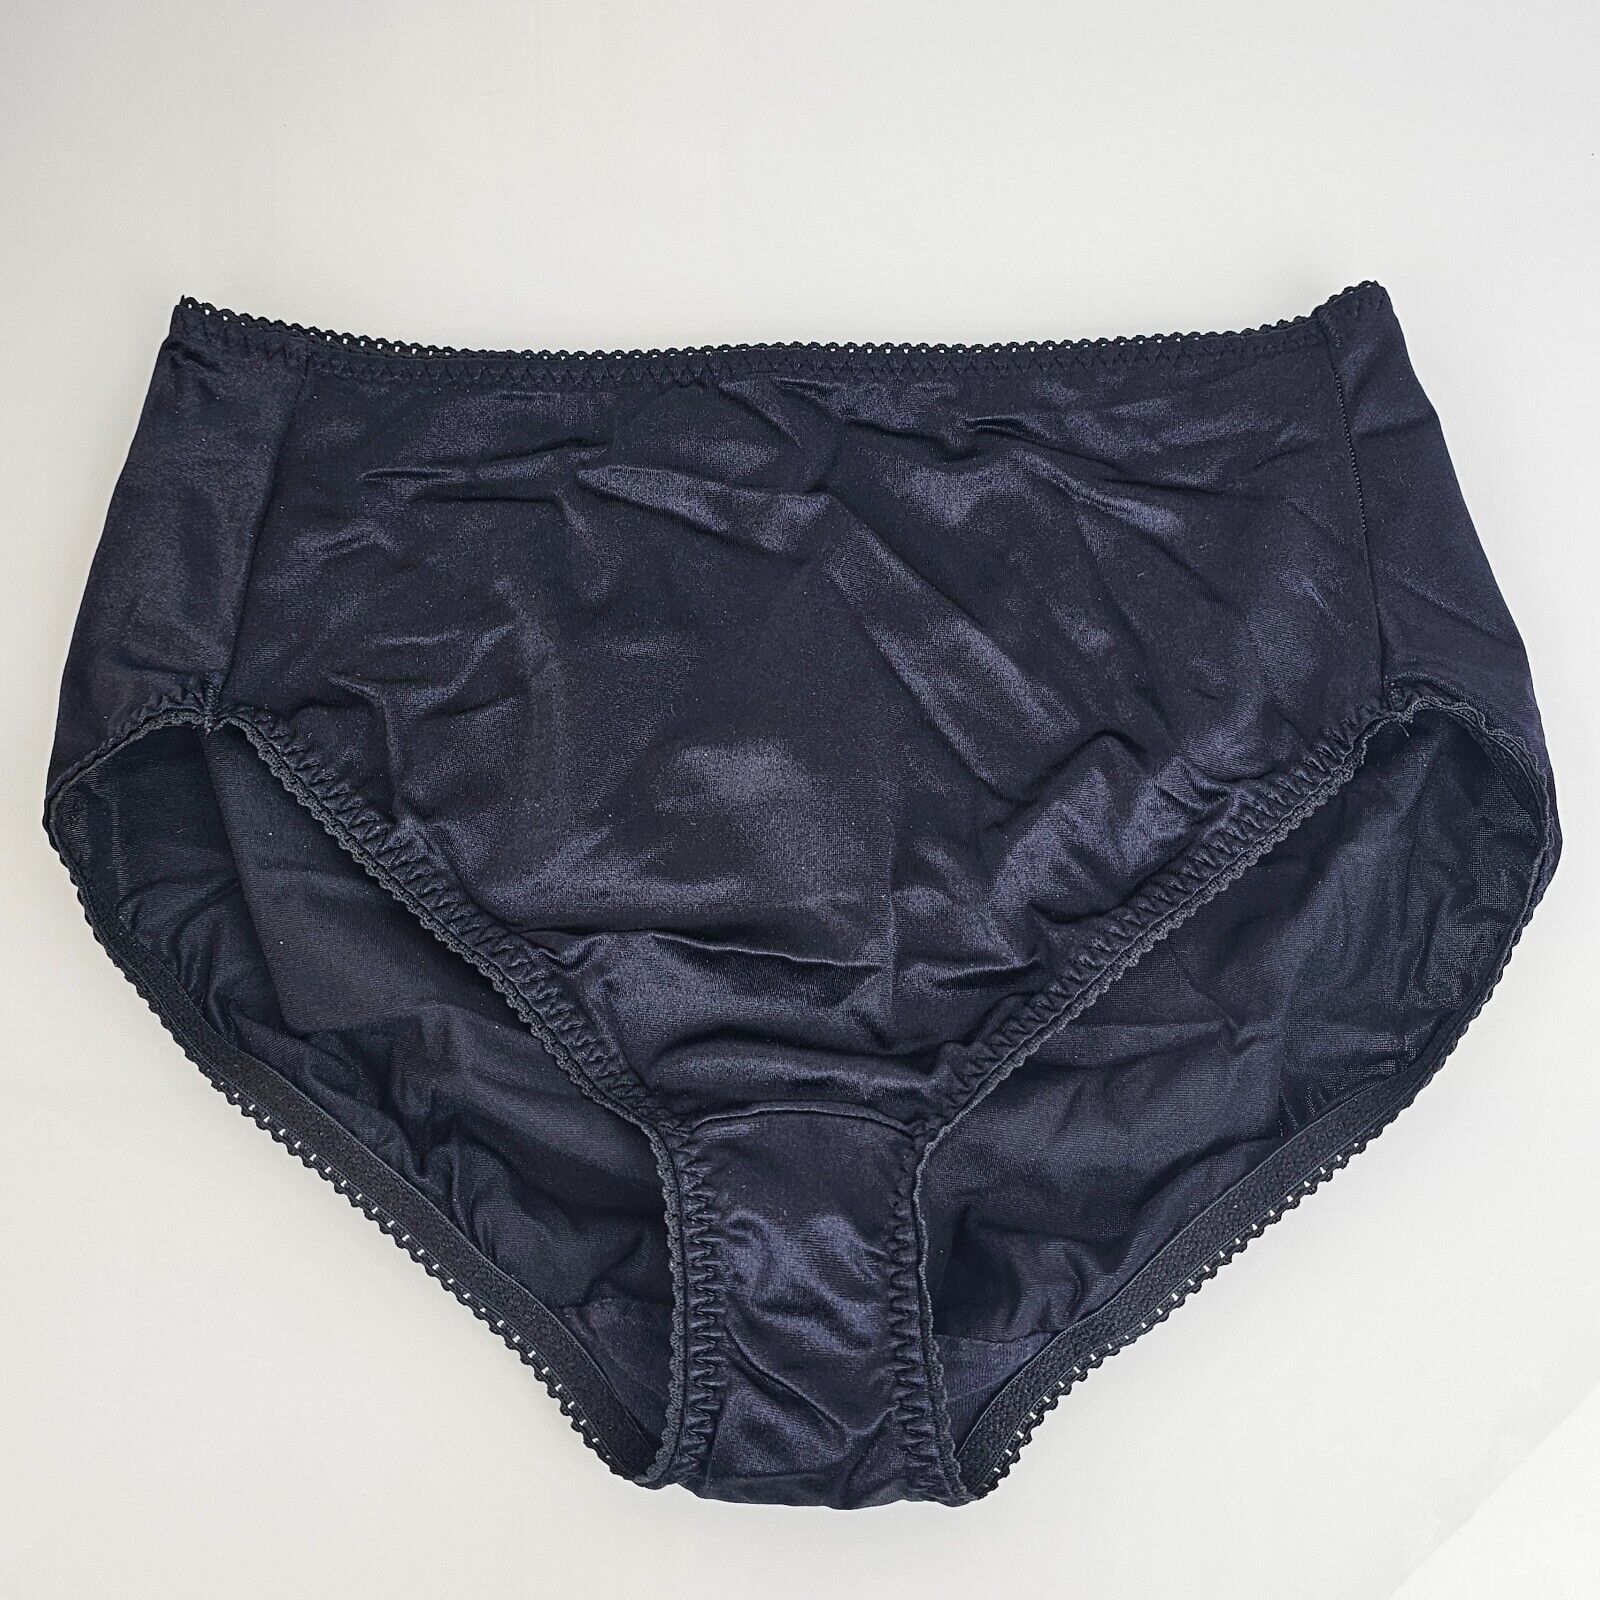 Primary image for Vanity Fair Black Second Skin Satin Panties Shiny Slippery Shapewear 8 9 XL XXL